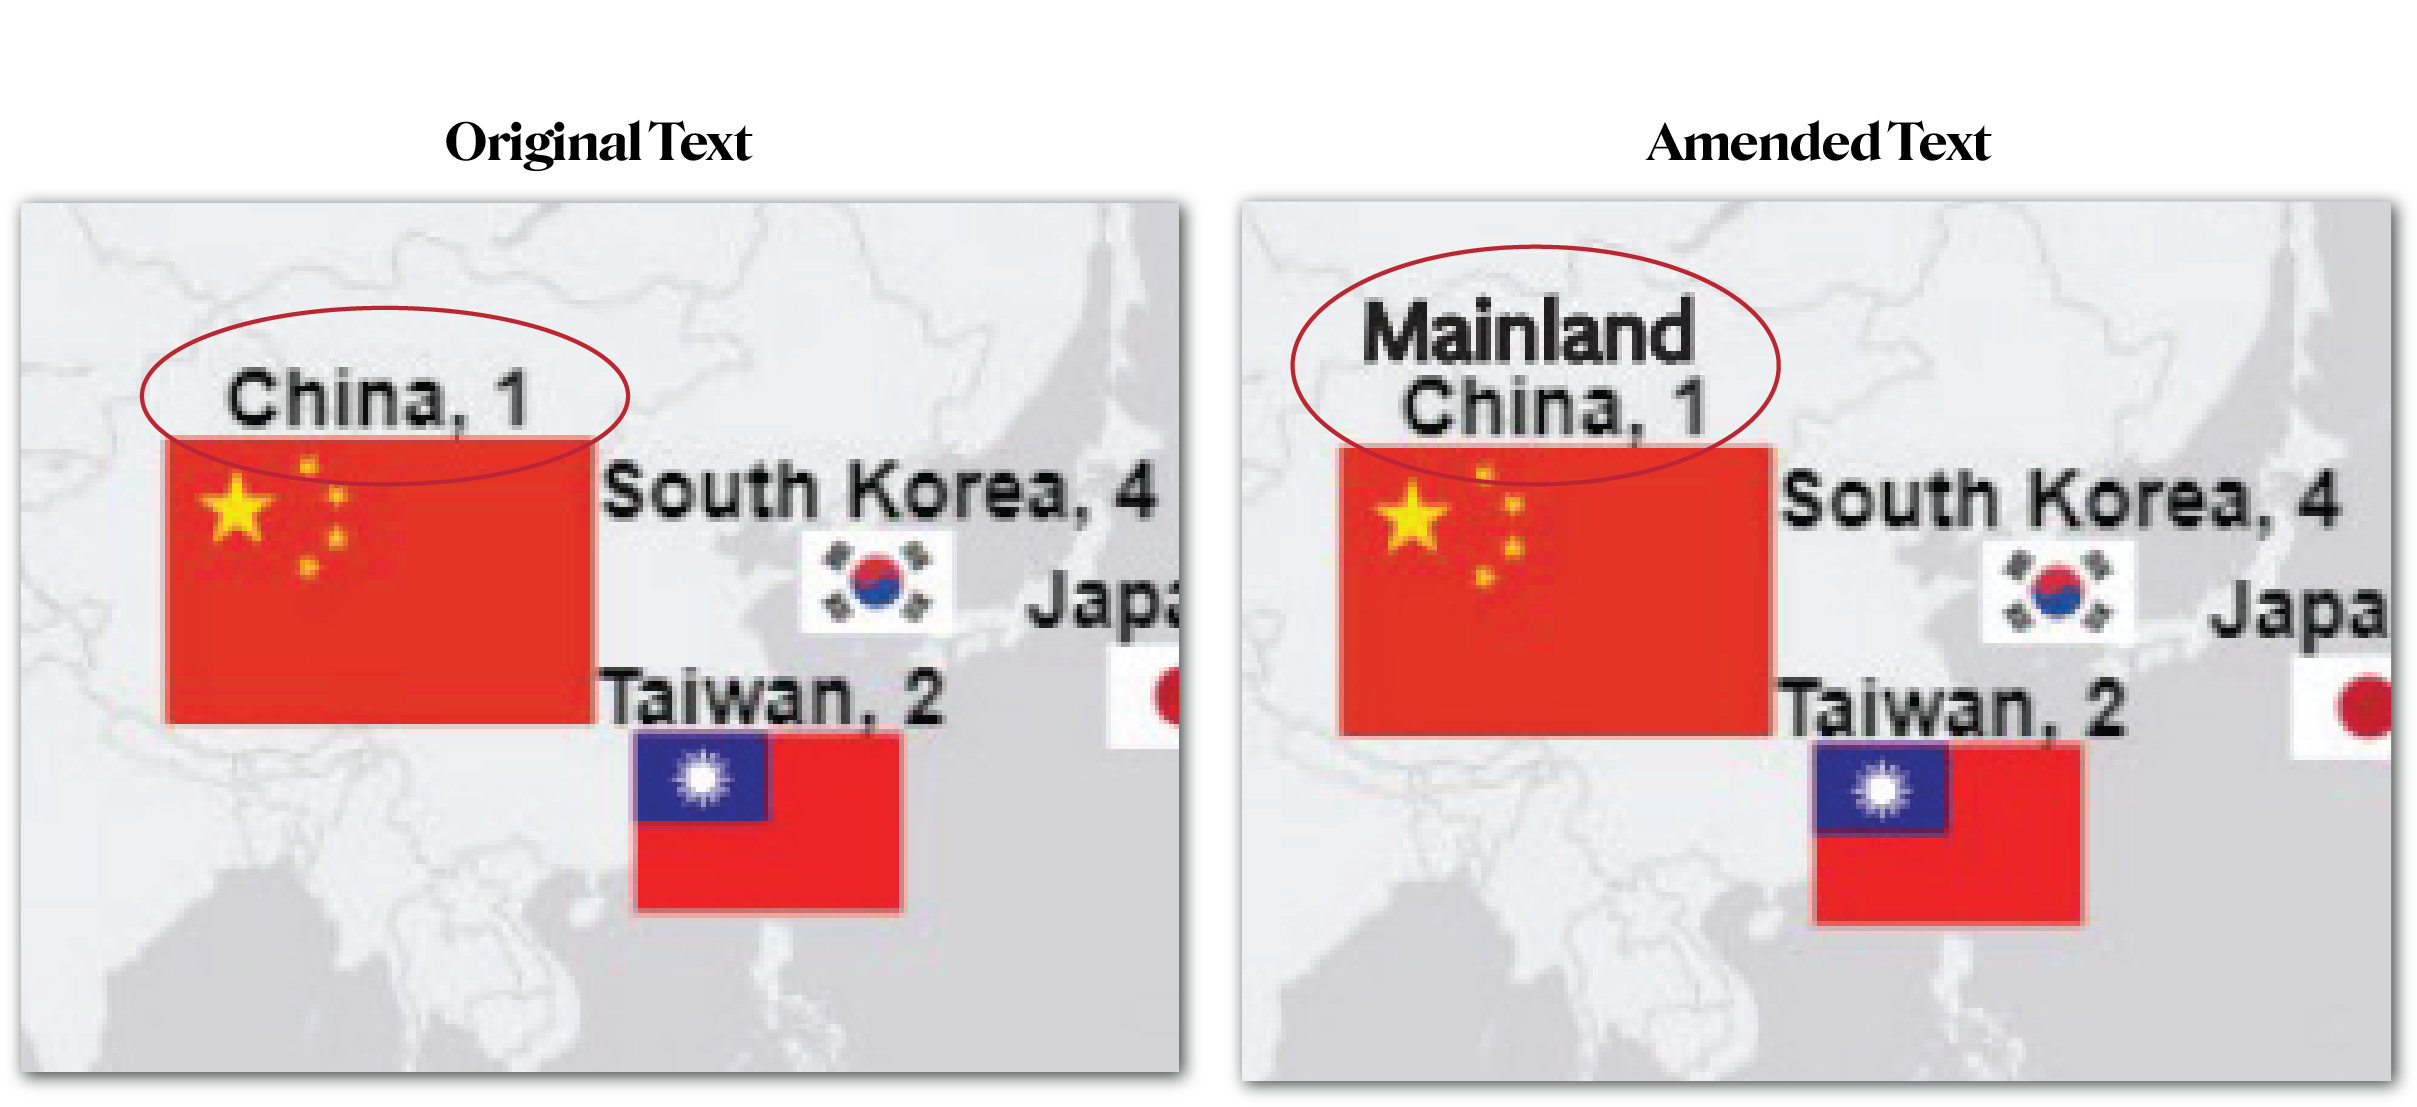 Taiwan Graphic Test 3.4 Feb 2022